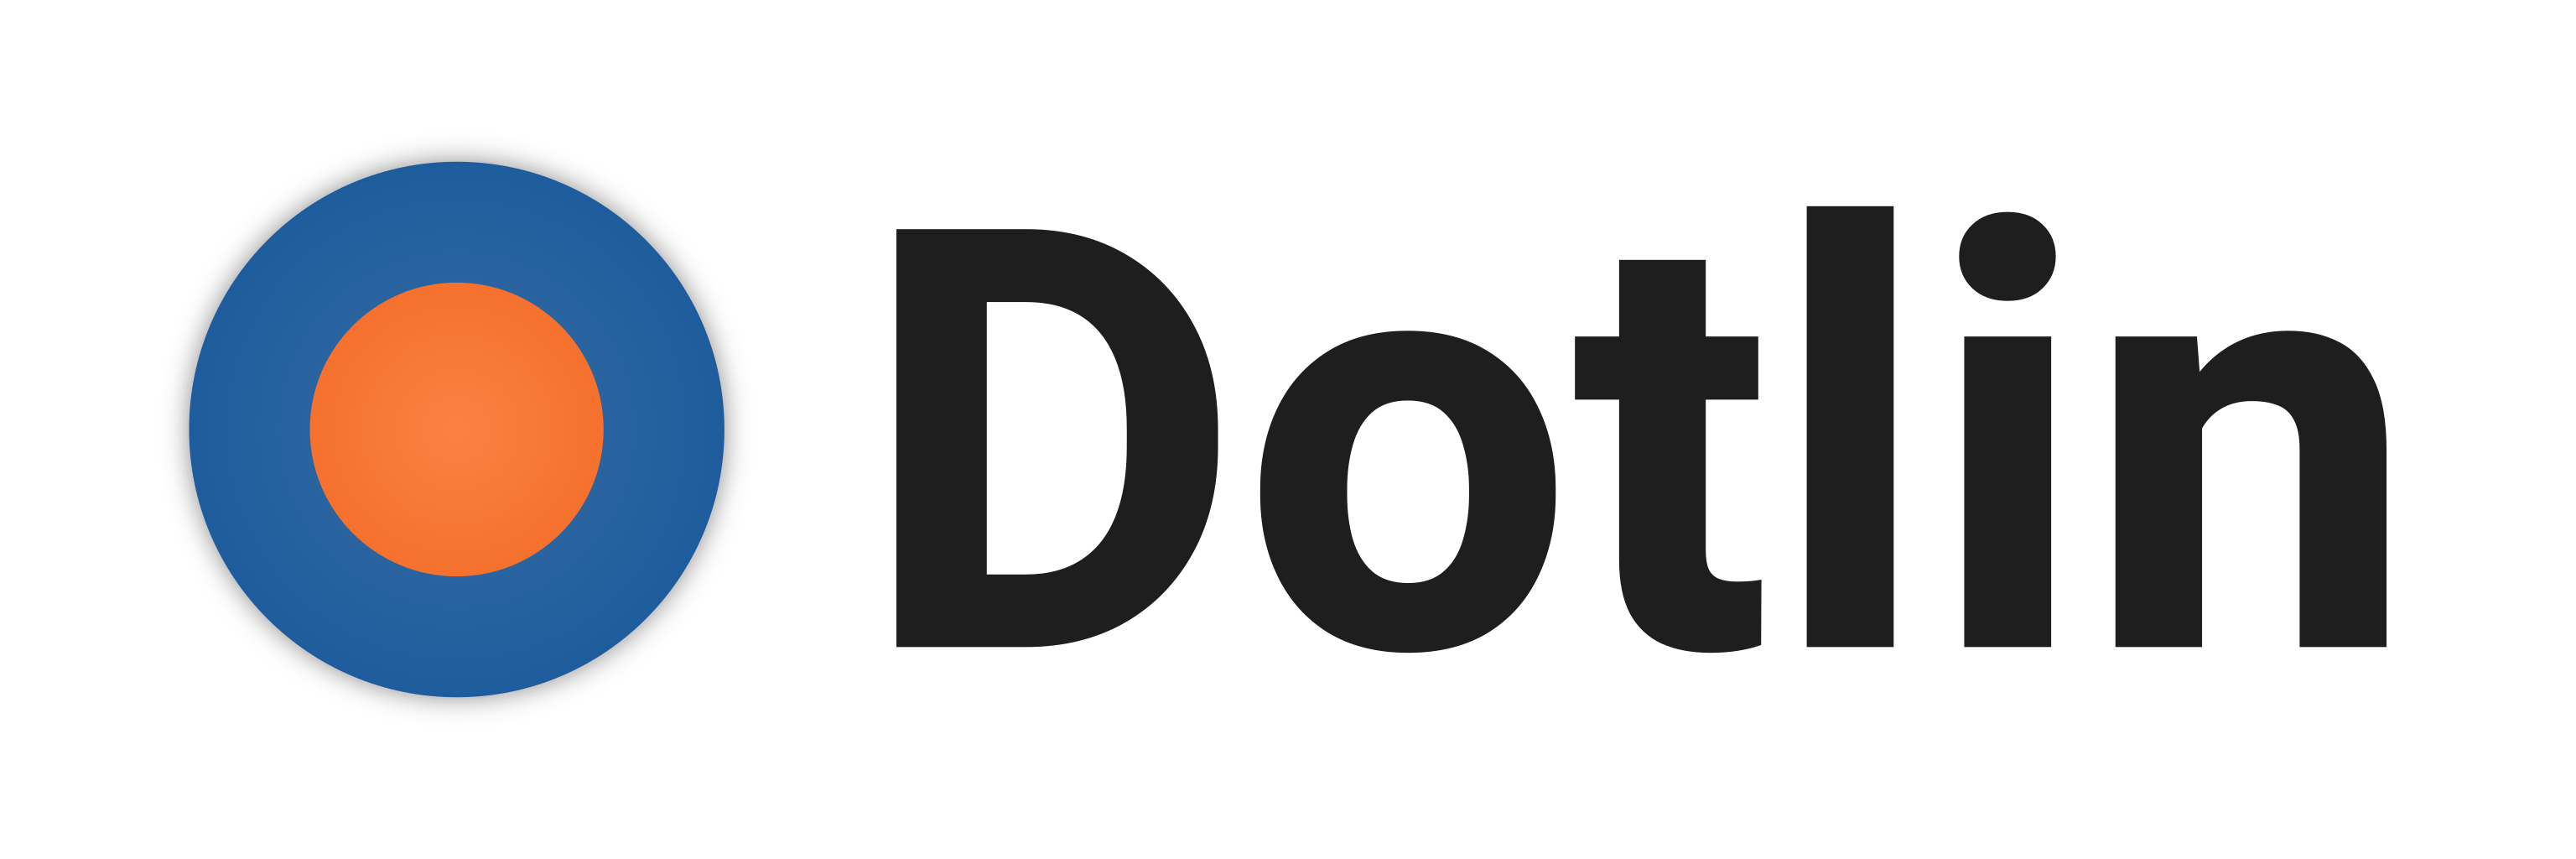 Dotlin logo